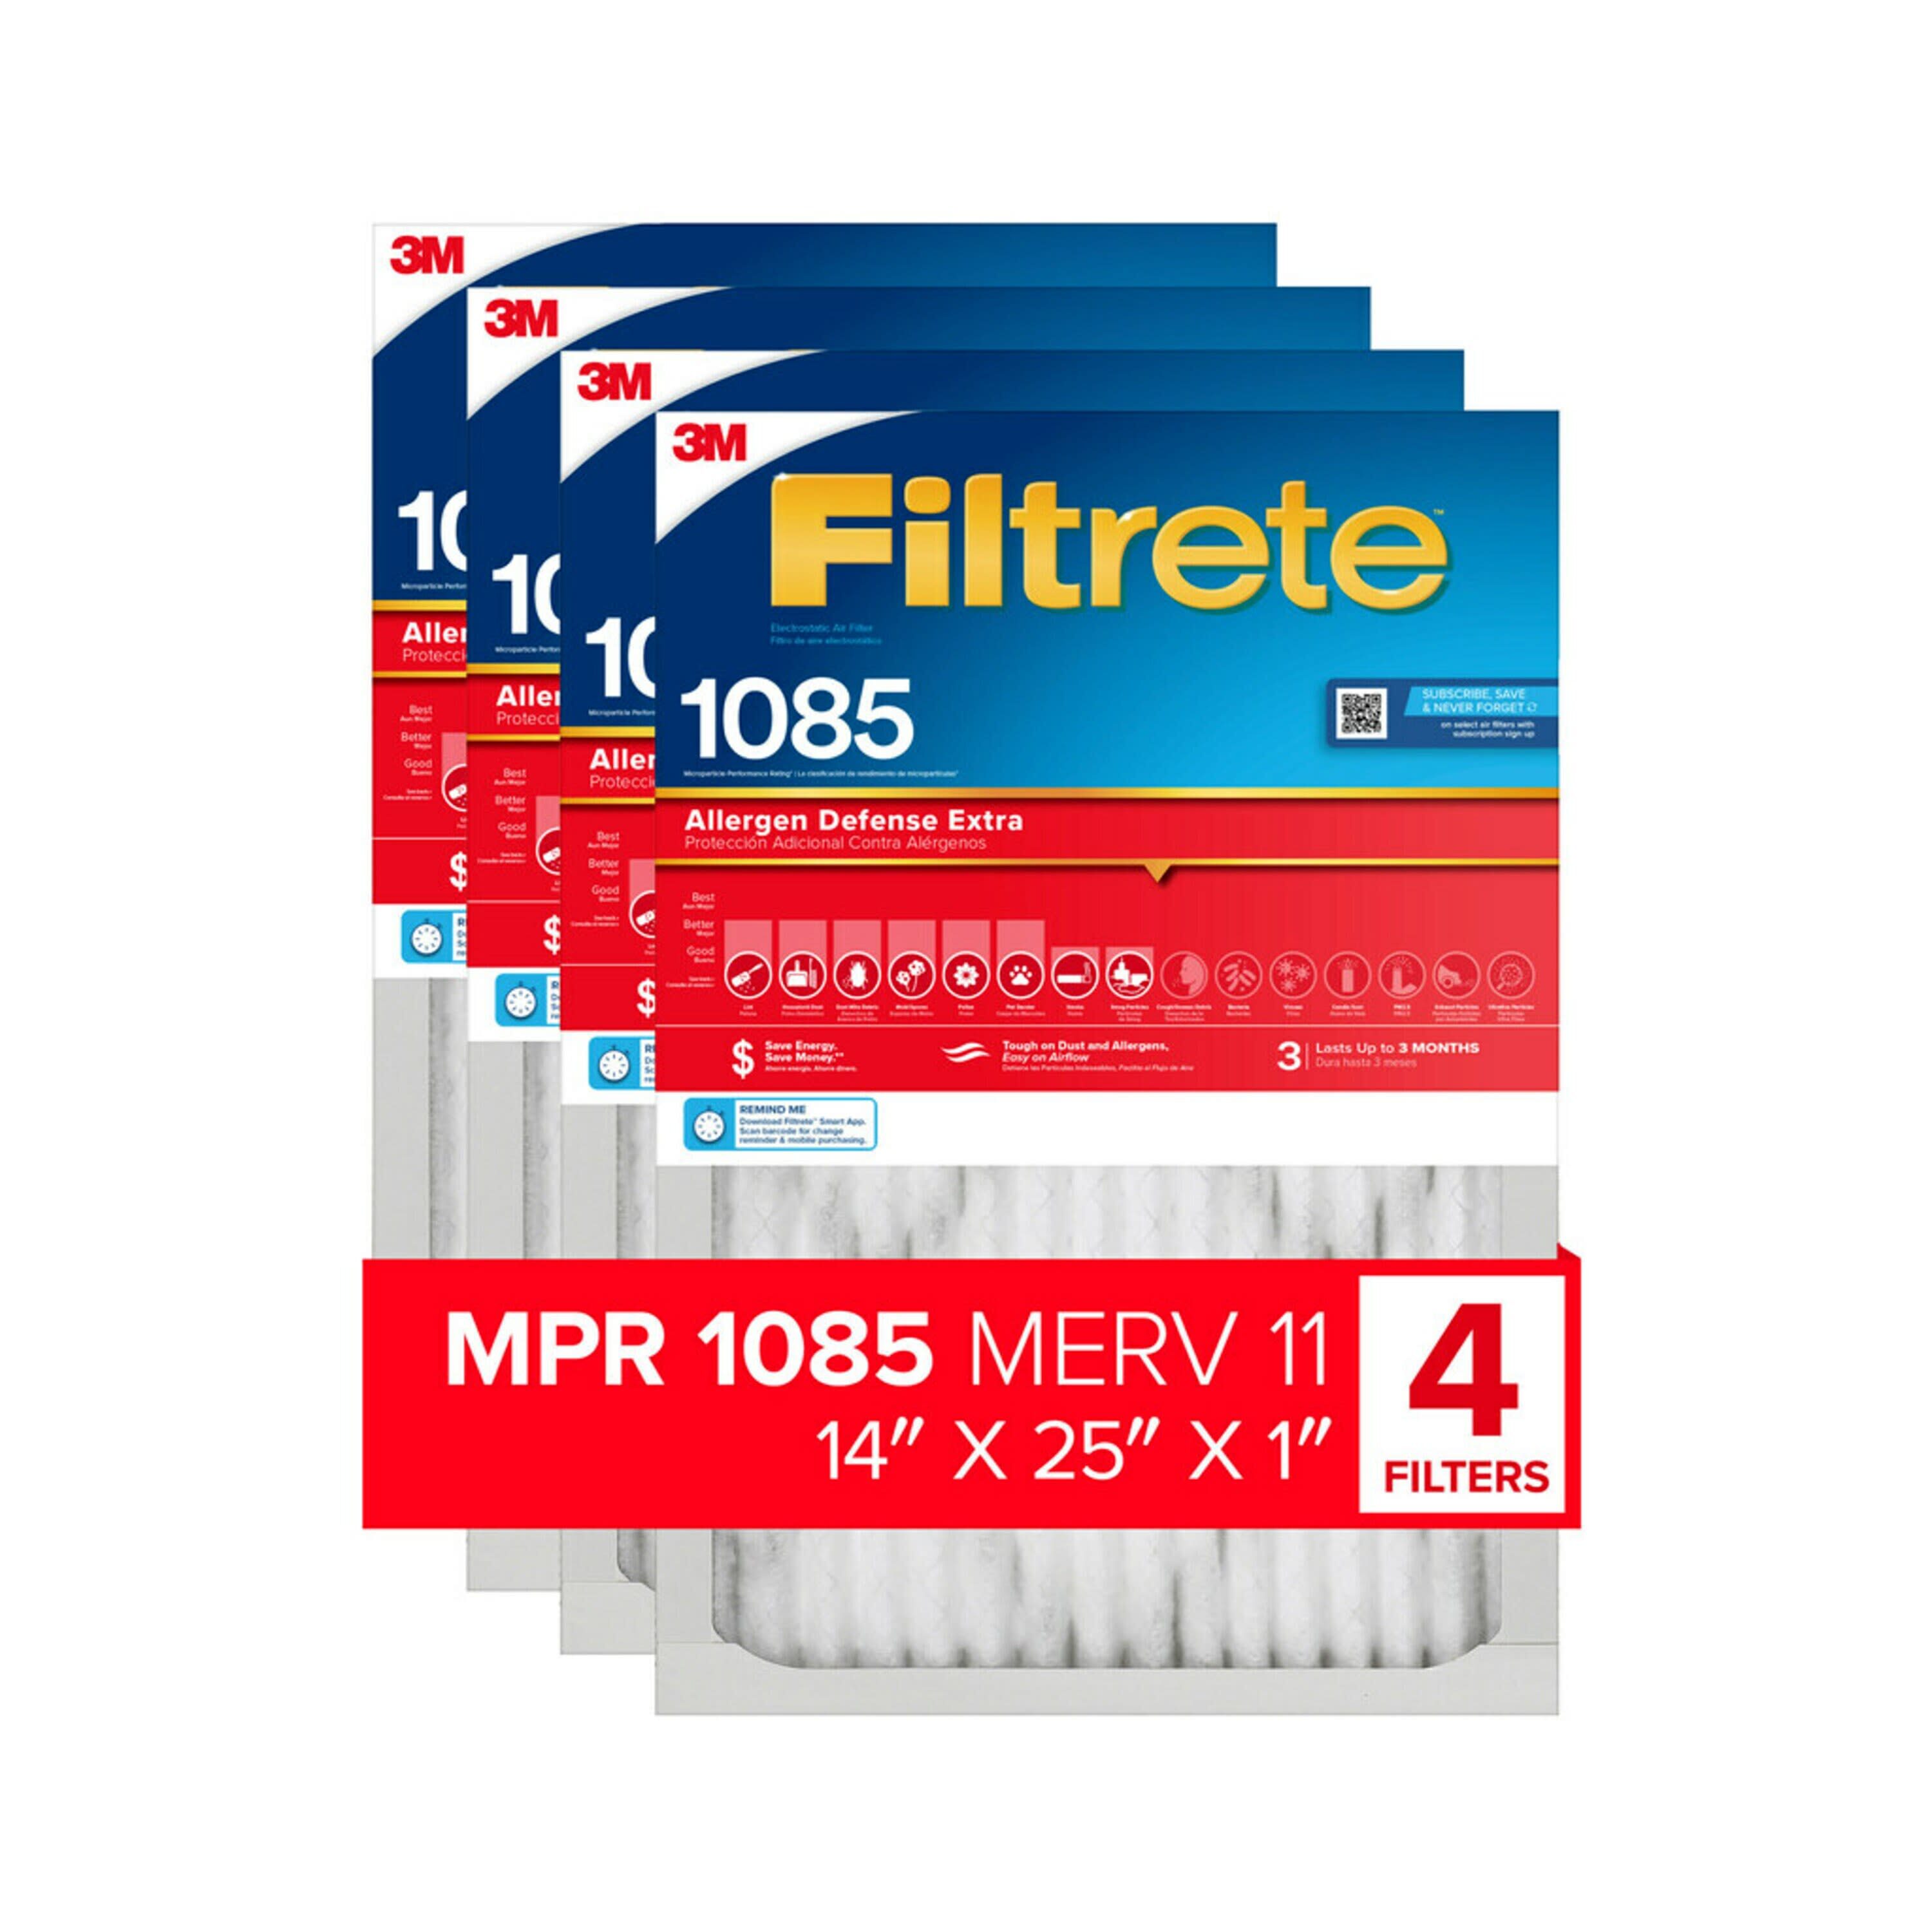 14-in W x 25-in L x 1-in 11 MERV 1085 MPR Allergen Defense Extra Electrostatic Pleated Air Filter (4-Pack) | - Filtrete 1204-4